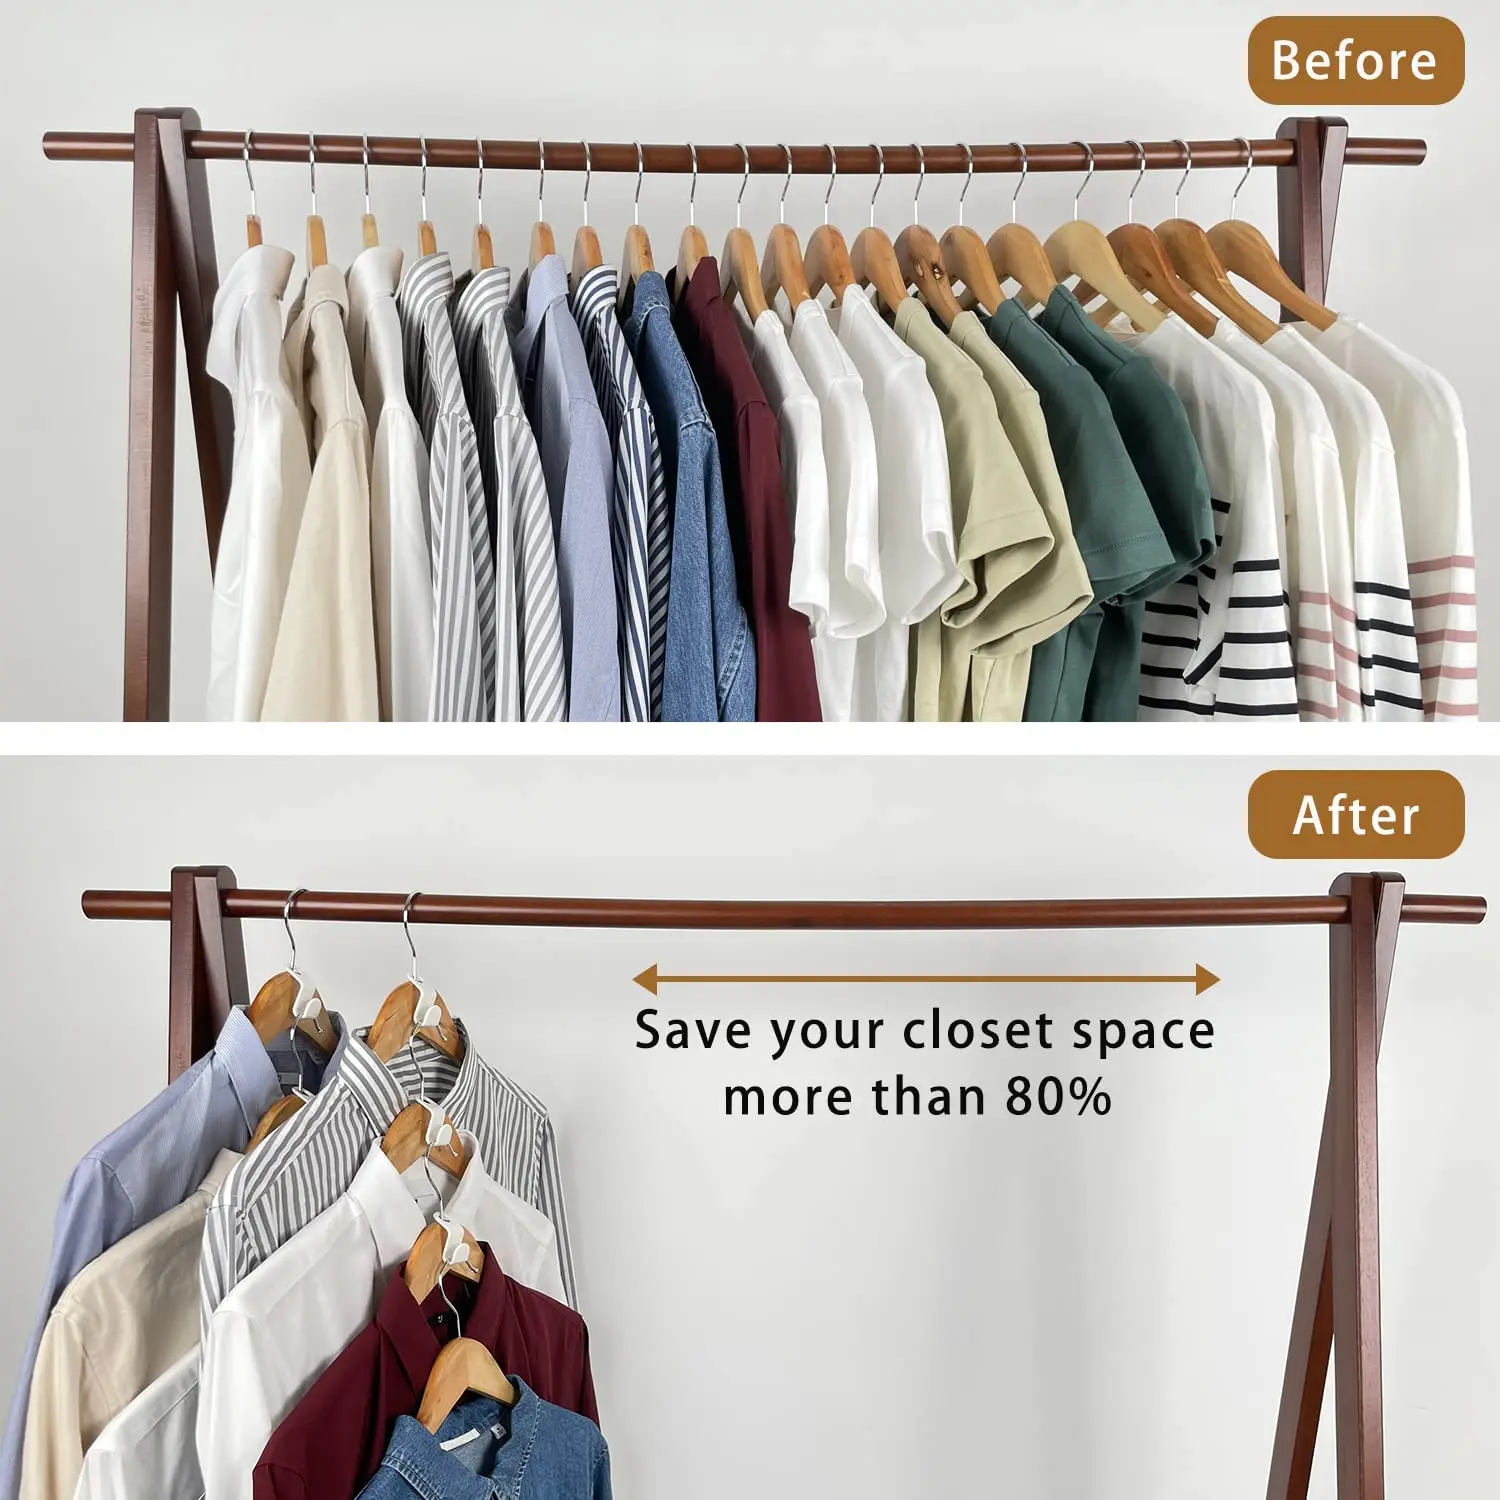 https://ae01.alicdn.com/kf/Sc547722131064103a74e8ed98ac56a47j/Clothes-Hanger-Connector-Hooks-Mini-Hanger-Extender-Clips-Wardrobe-Organizer-Rack-Closet-Coat-Space-Saving-Colorful.jpg